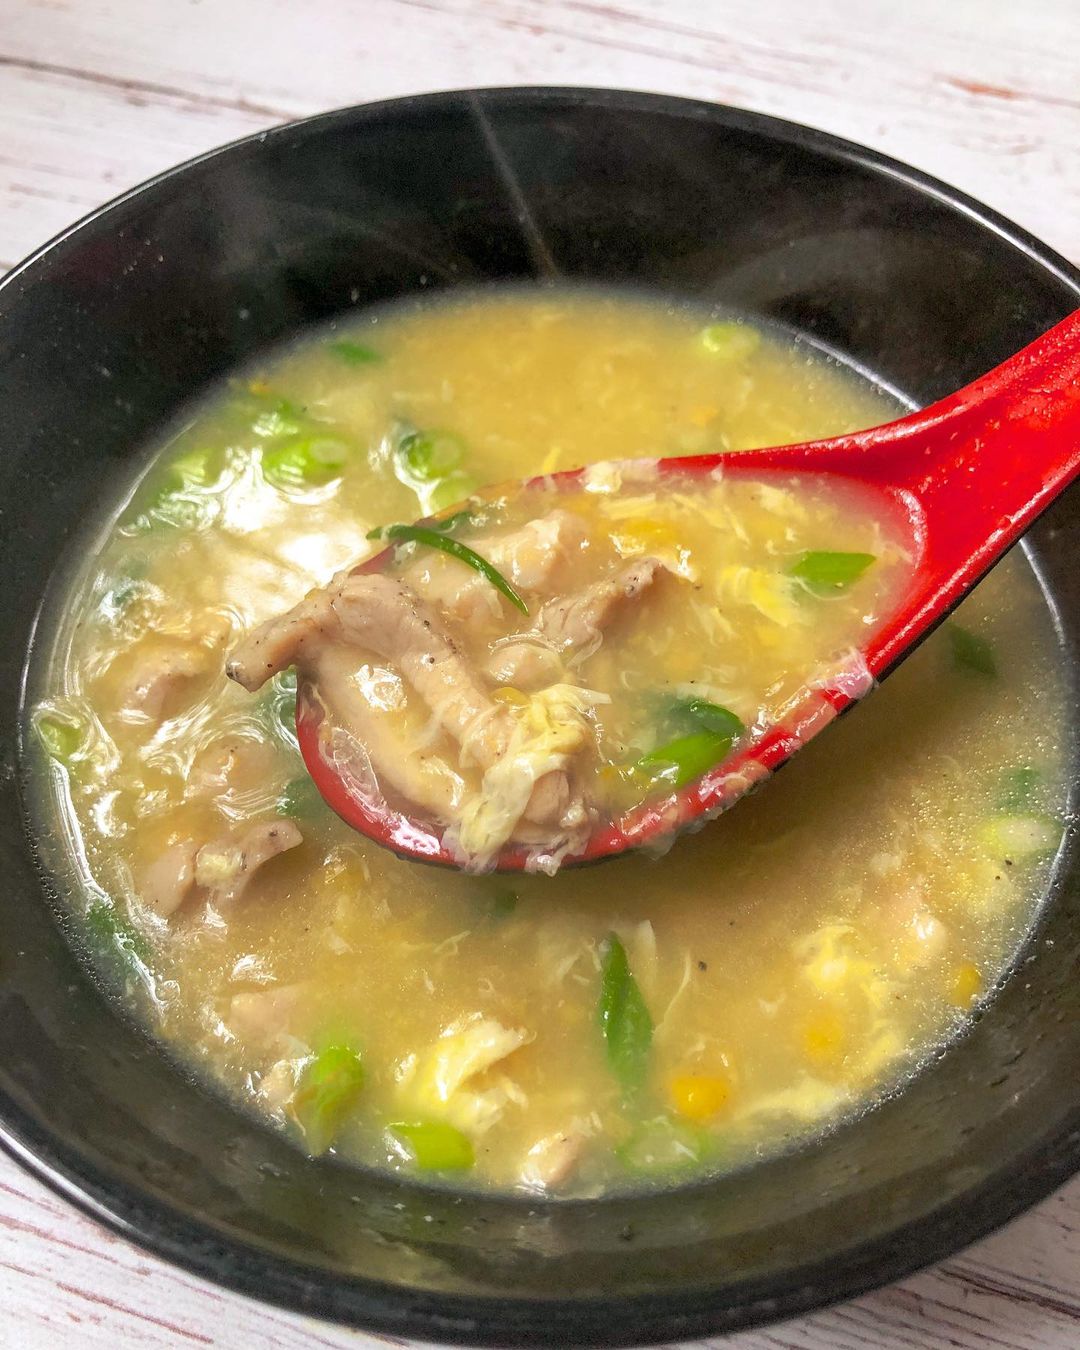 Pot of egg drop soup | Source: Instagram